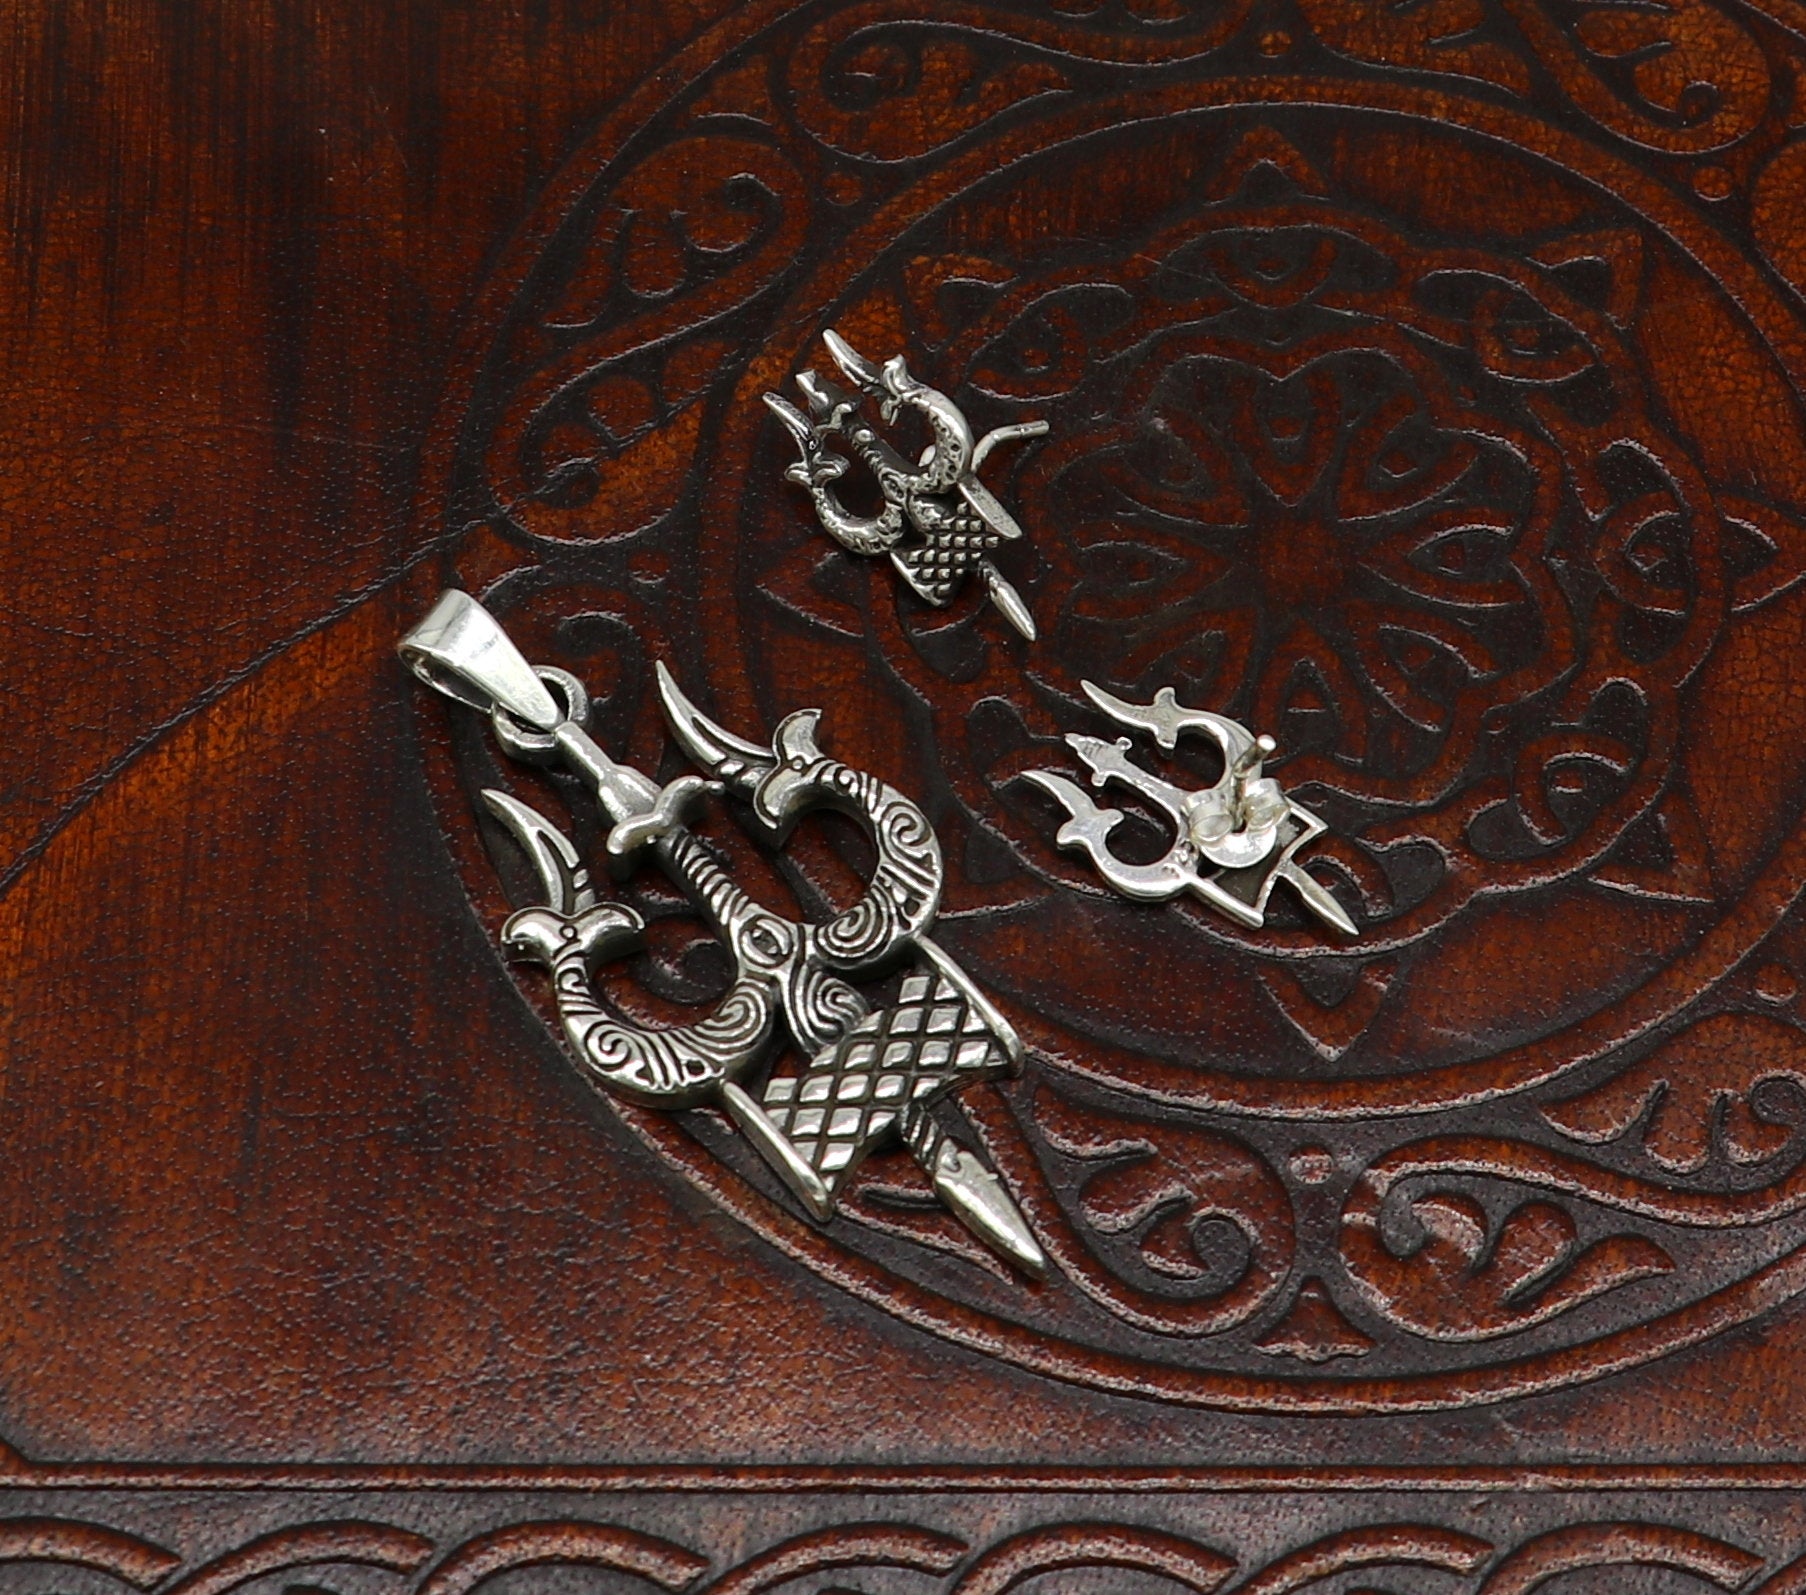 925 pure silver handmade idol shiva trident trishul shape designer stylish pendant and stud set, amazing gifting daily use jewelry ssp335 - TRIBAL ORNAMENTS